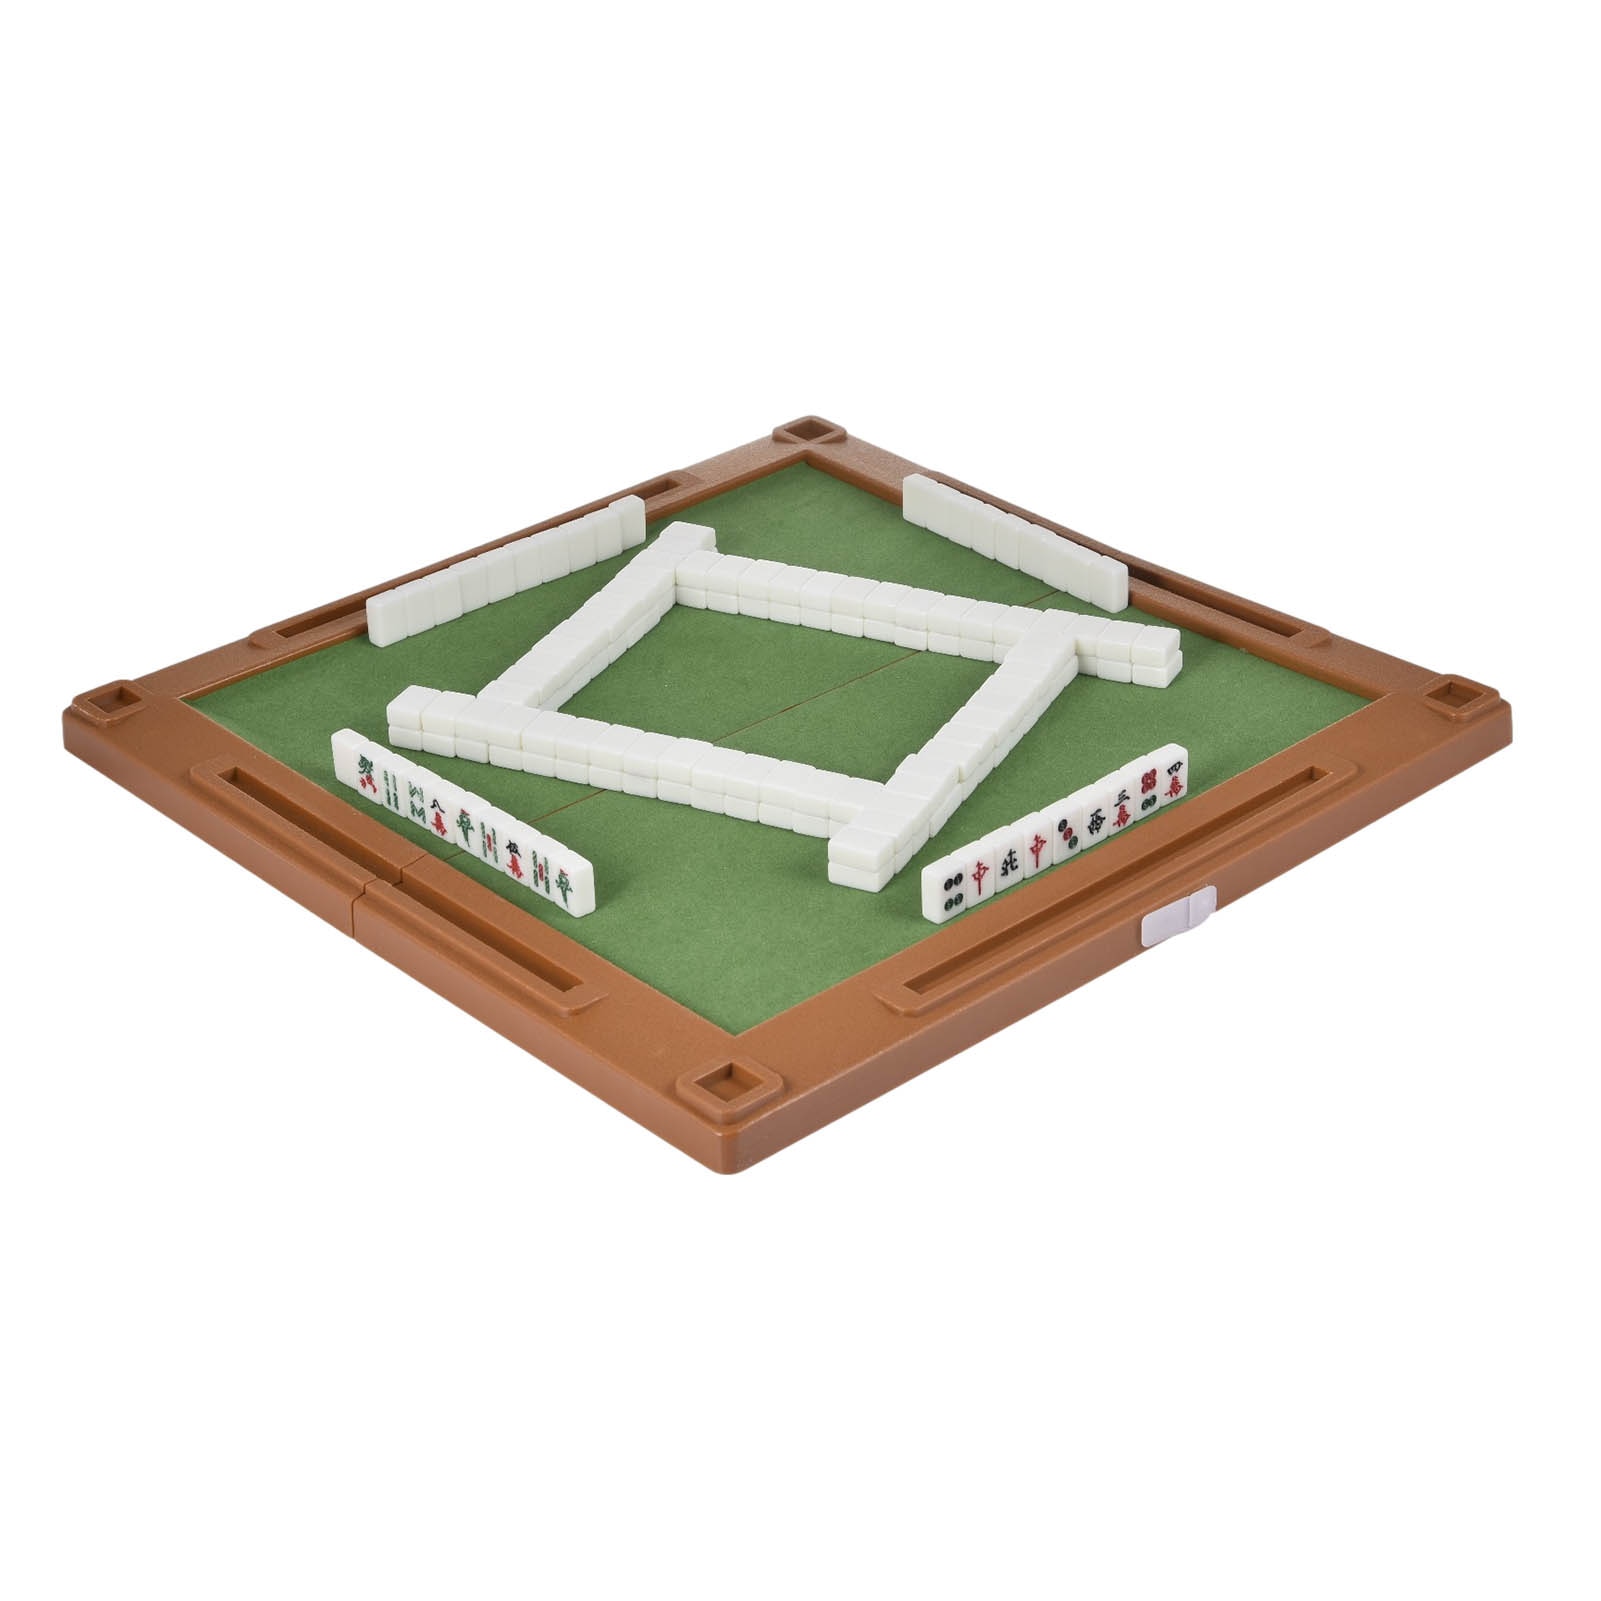 6 In 1 Combinatie Mini Game Set Opvouwbare Alle In 1 Mahjong Board Game Set Voor Party Familie Vrienden Game